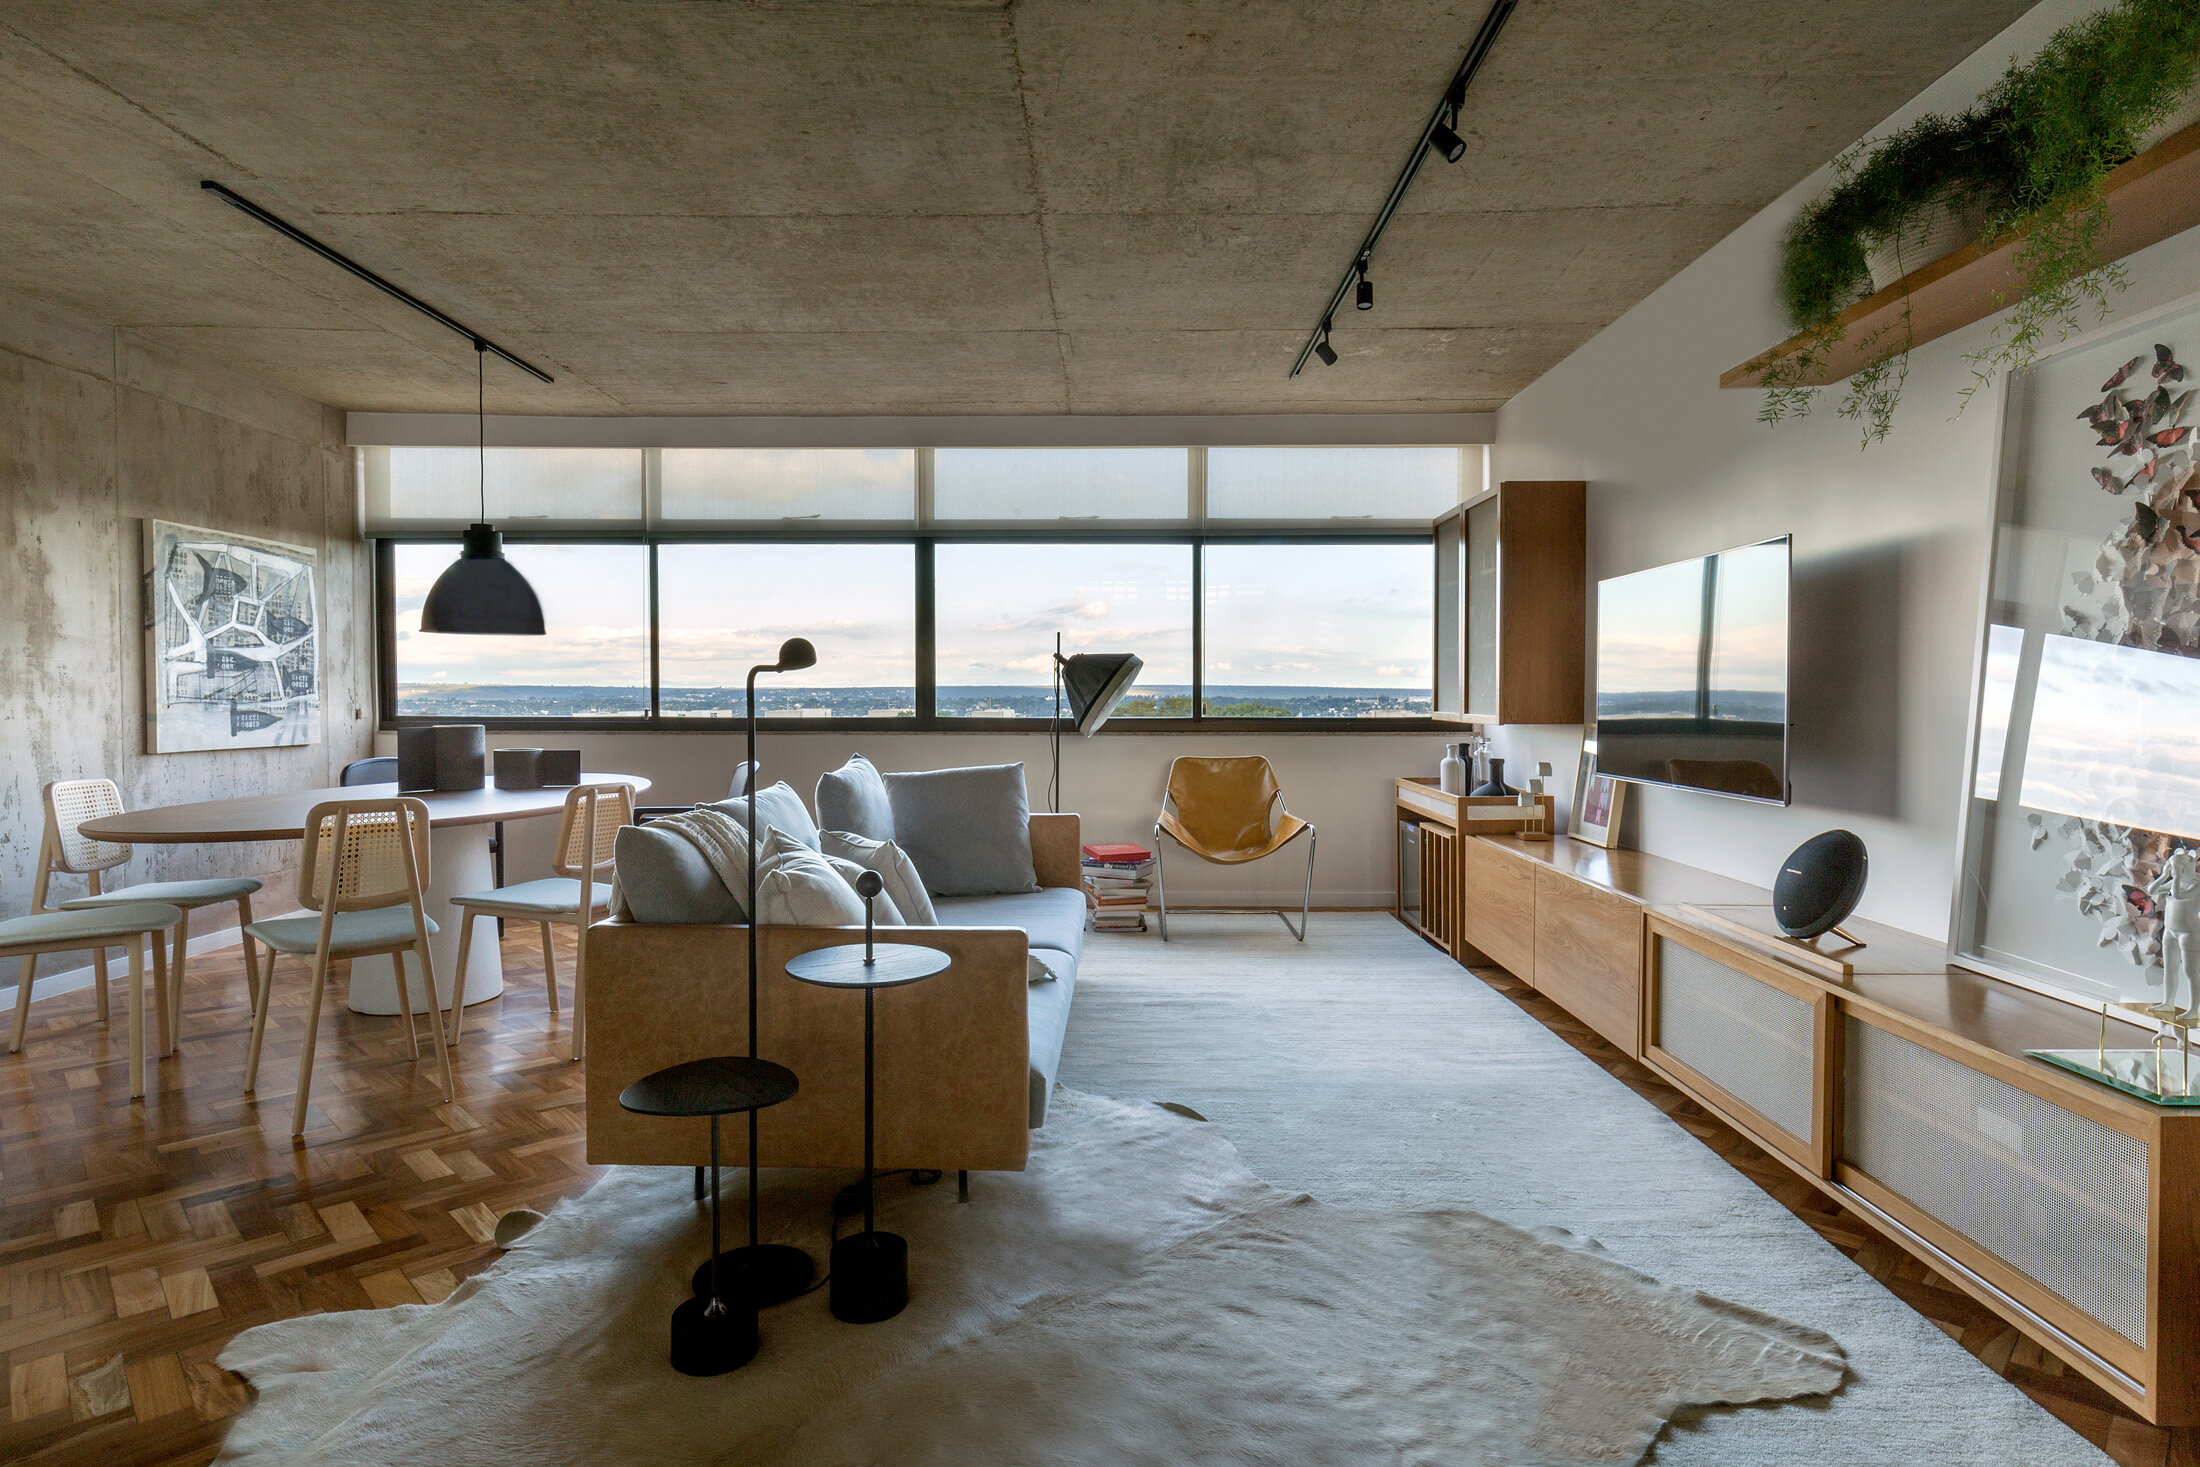 apartamento 115 s + sainz arquitetura + design + interior + brasilia + reforma + arquitetura19.jpg